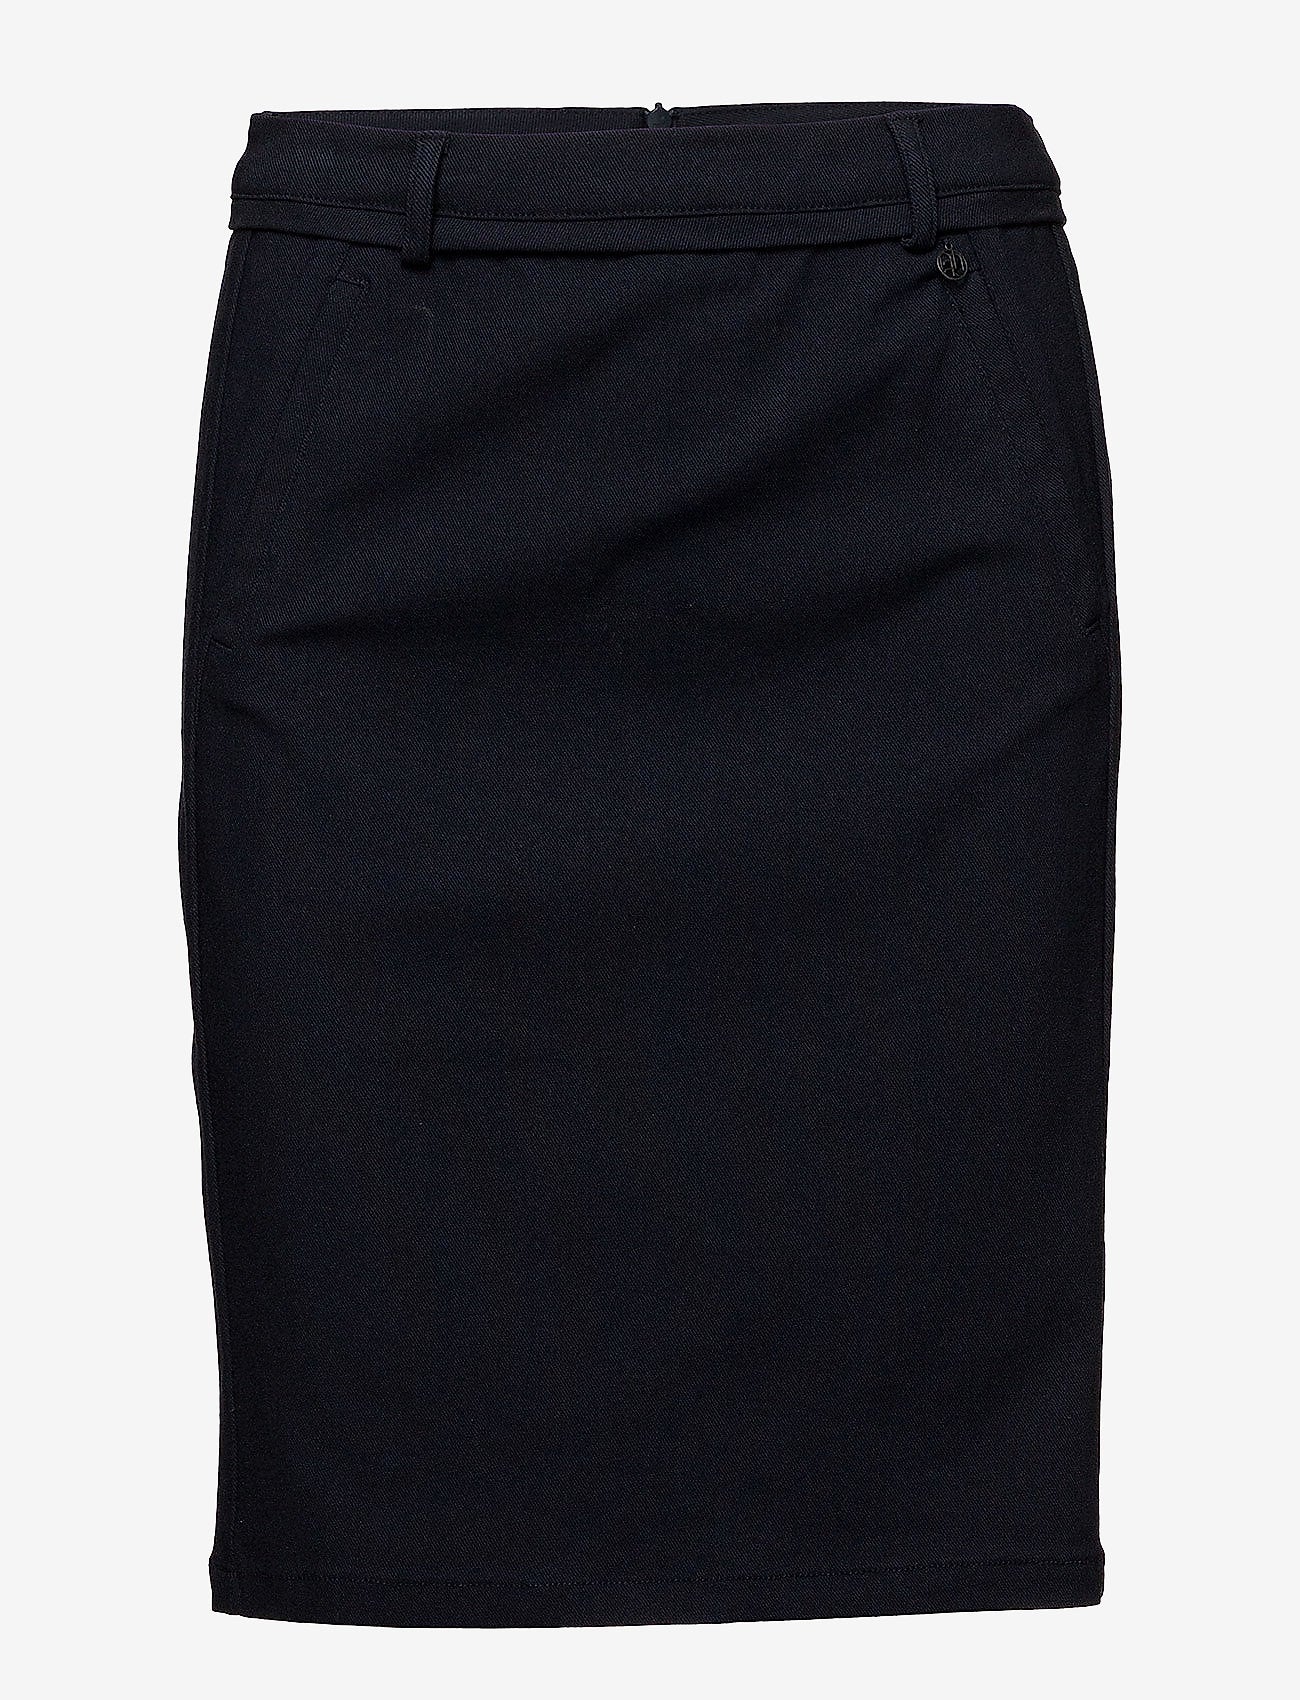 minus carma skirt black iris/navy work skirt